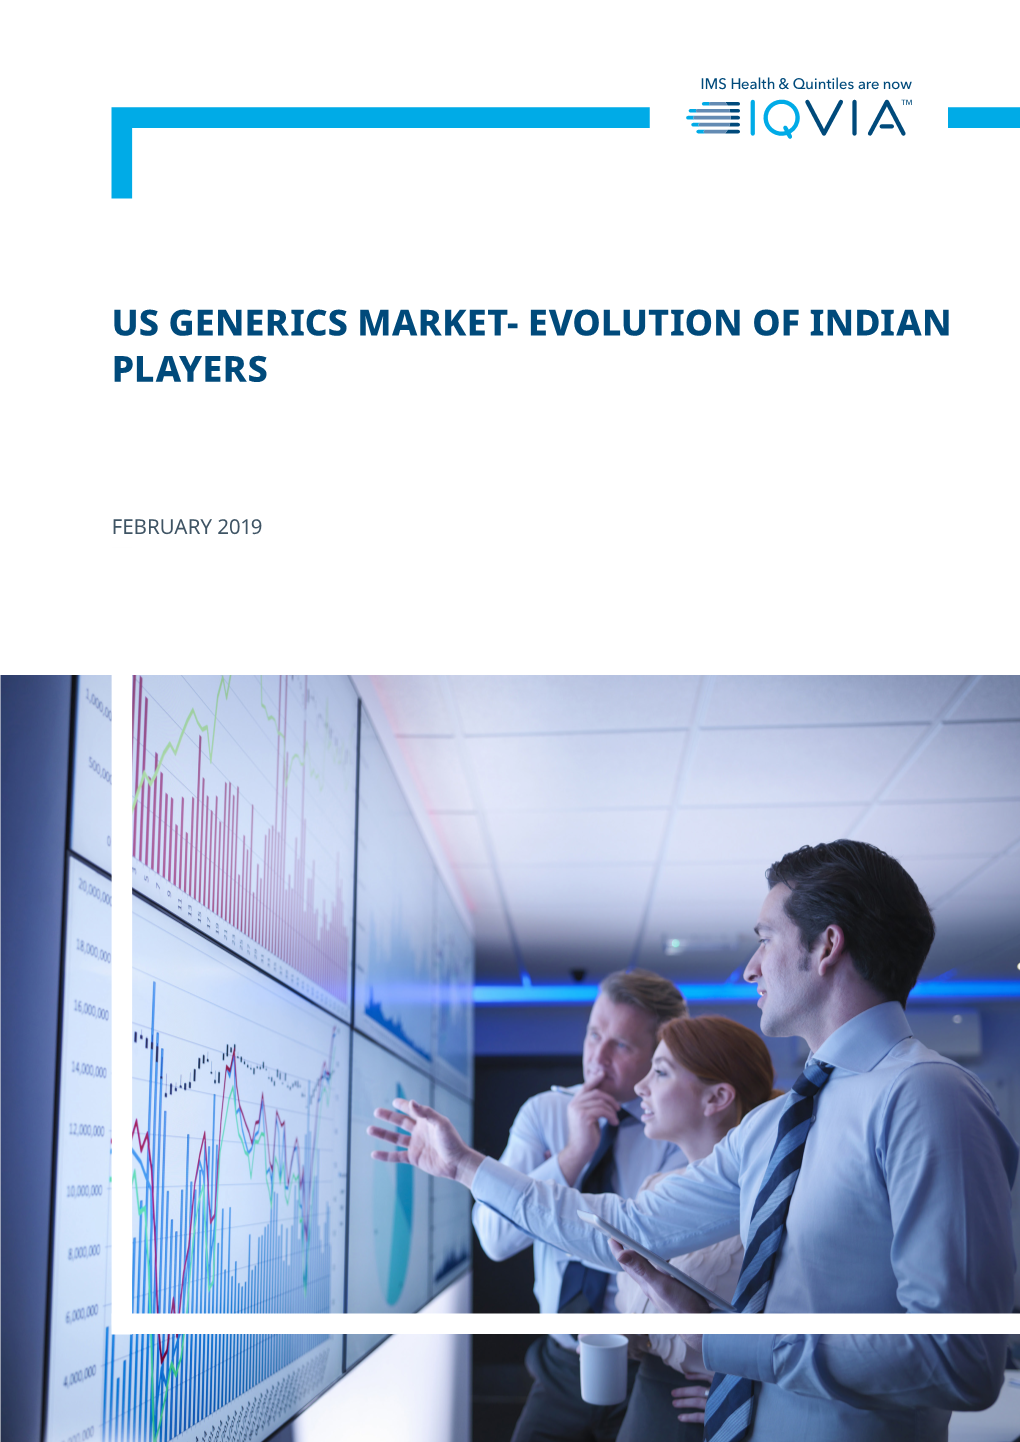 Us Generics Market- Evolution of Indian Players